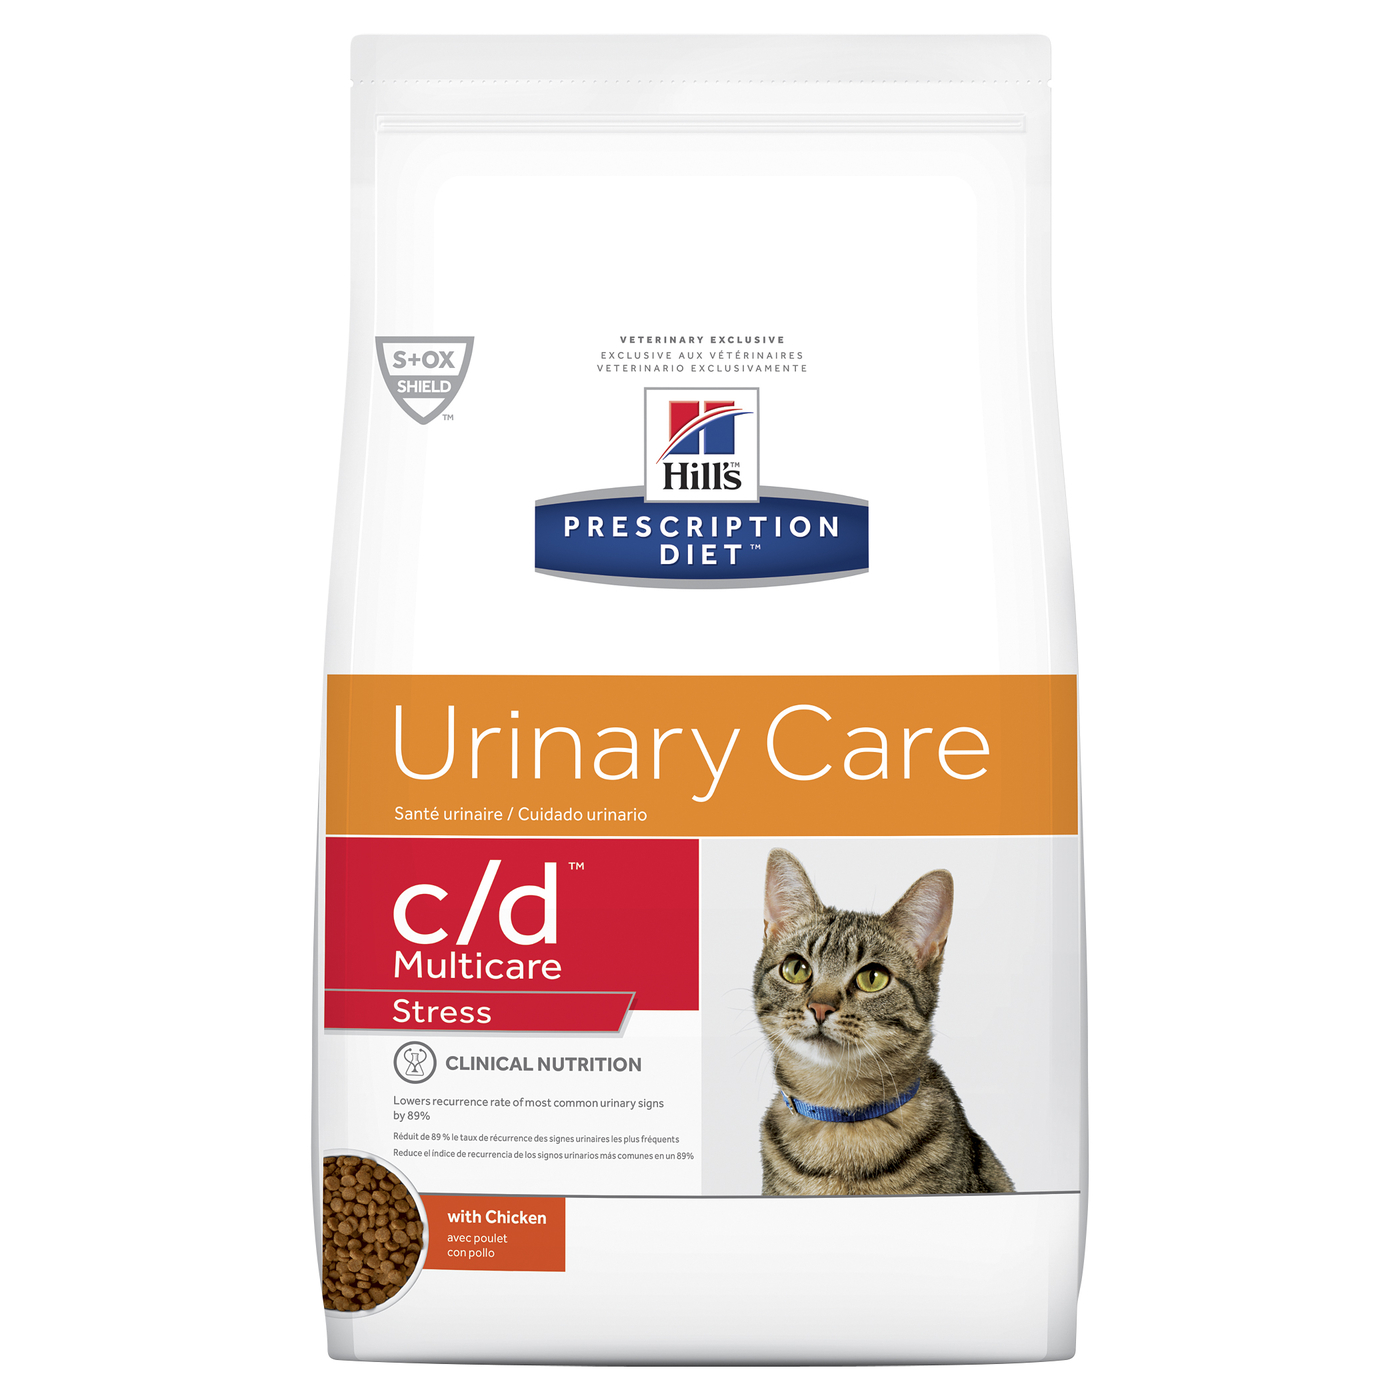 Hills Prescription Diet c/d Multicare Stress Urinary Care Dry Cat Food image 0